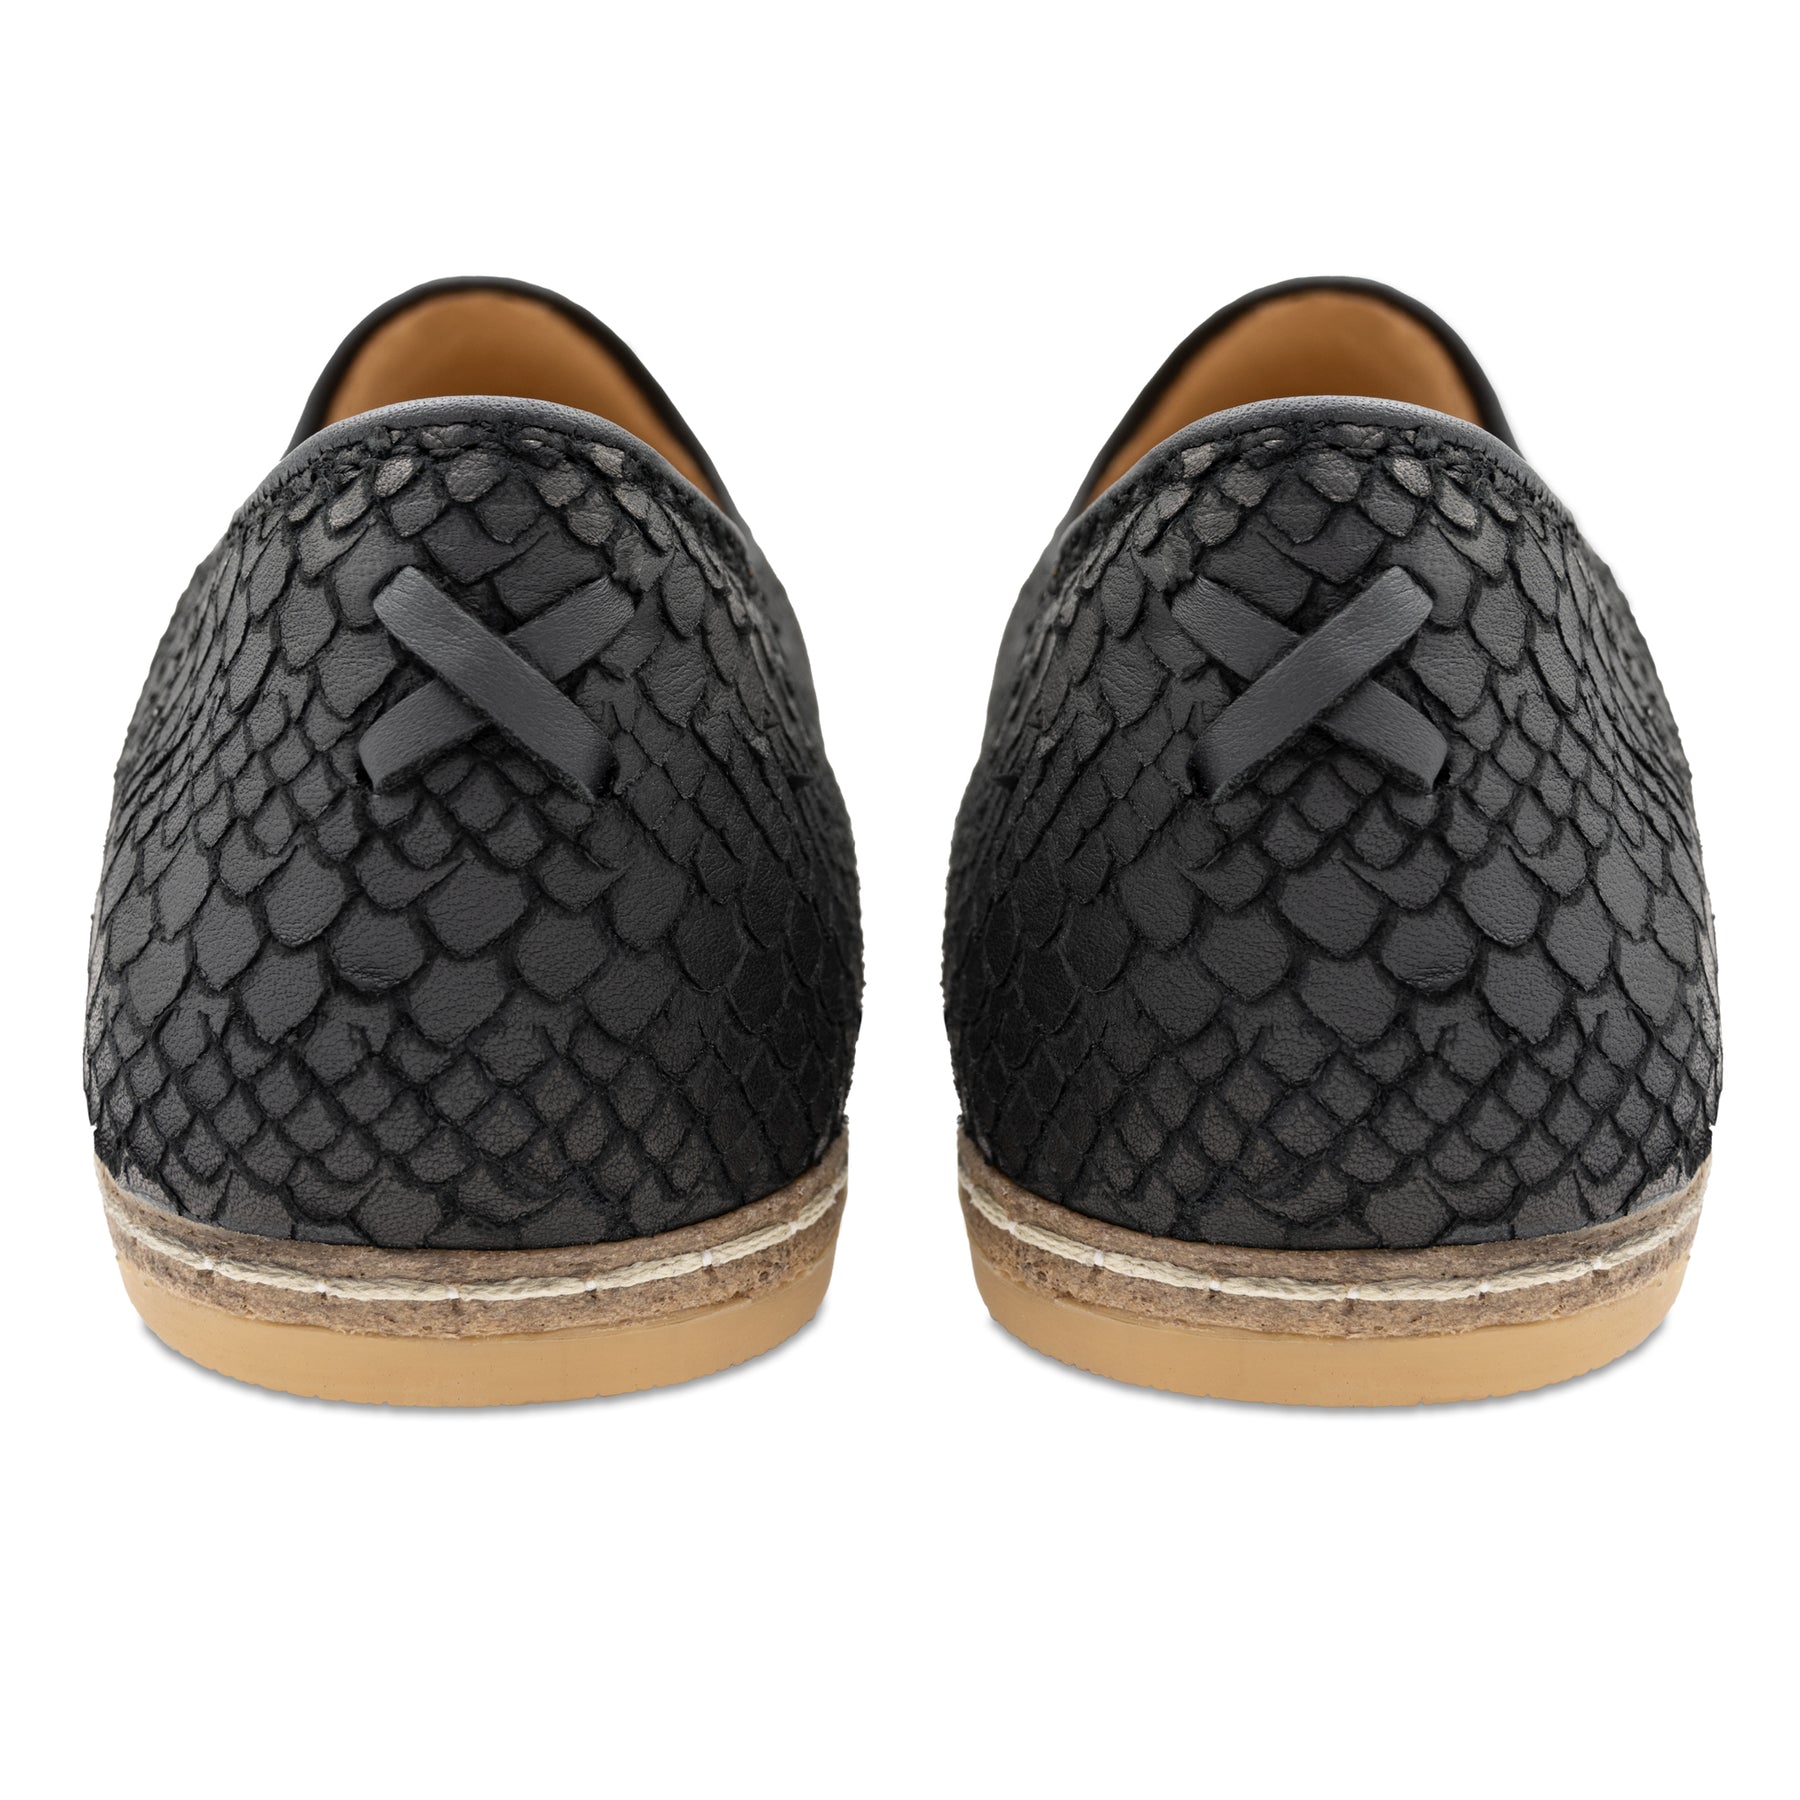 Wild Black Slip Ons for Men - Charix Shoes